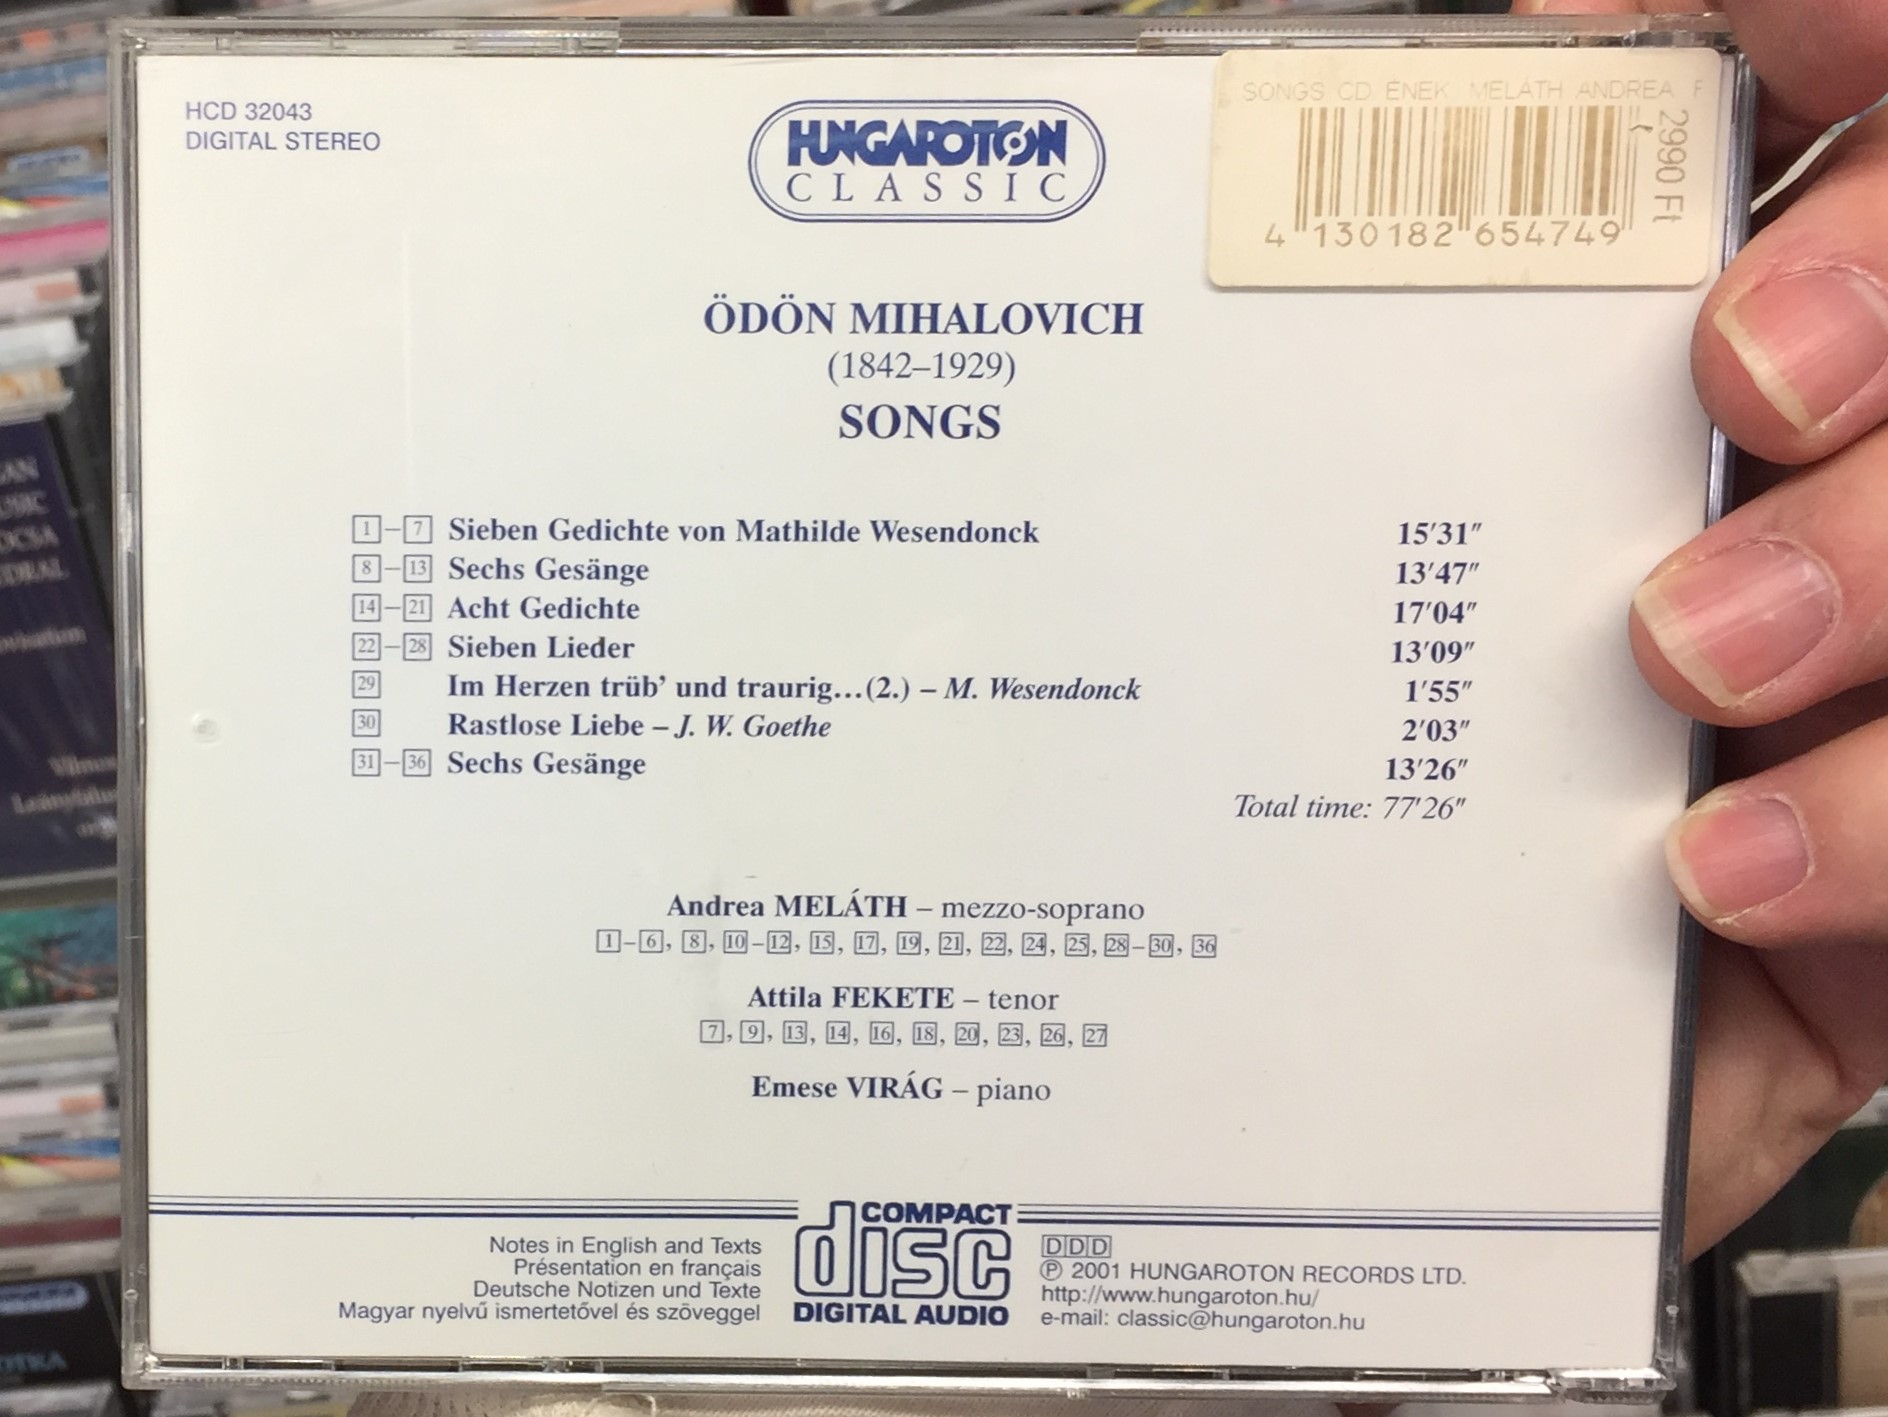 odon-mihalovich-songs-emese-virag-andrea-melath-attila-fekete-hungaroton-classic-audio-cd-2001-stereo-hcd-32043-2-.jpg